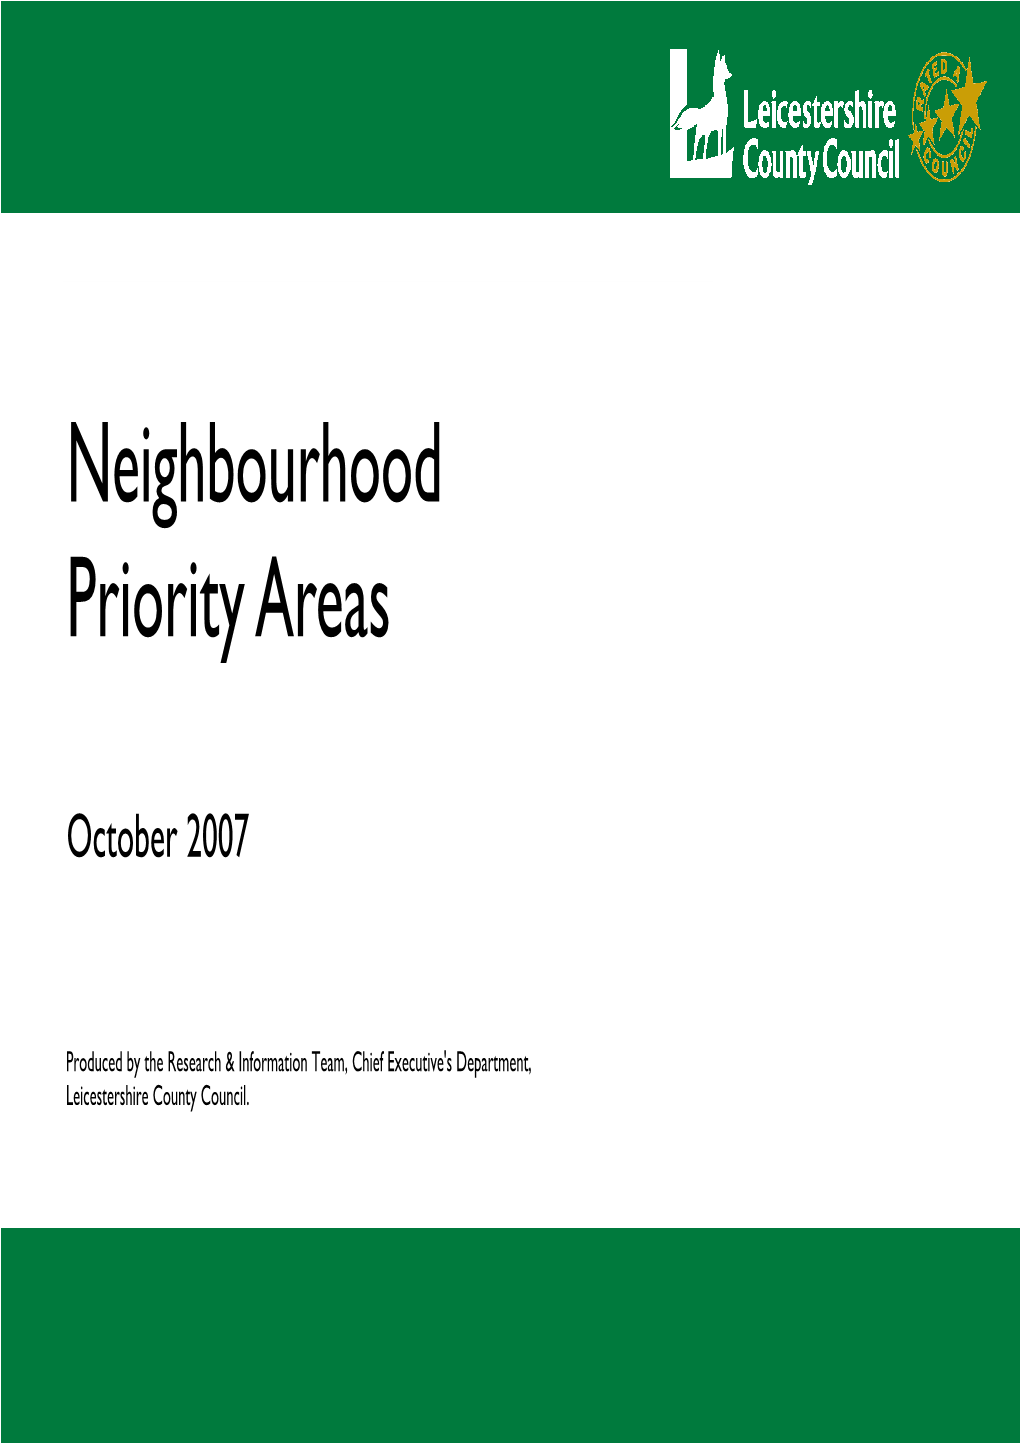 Neighbourhood Priority Areas